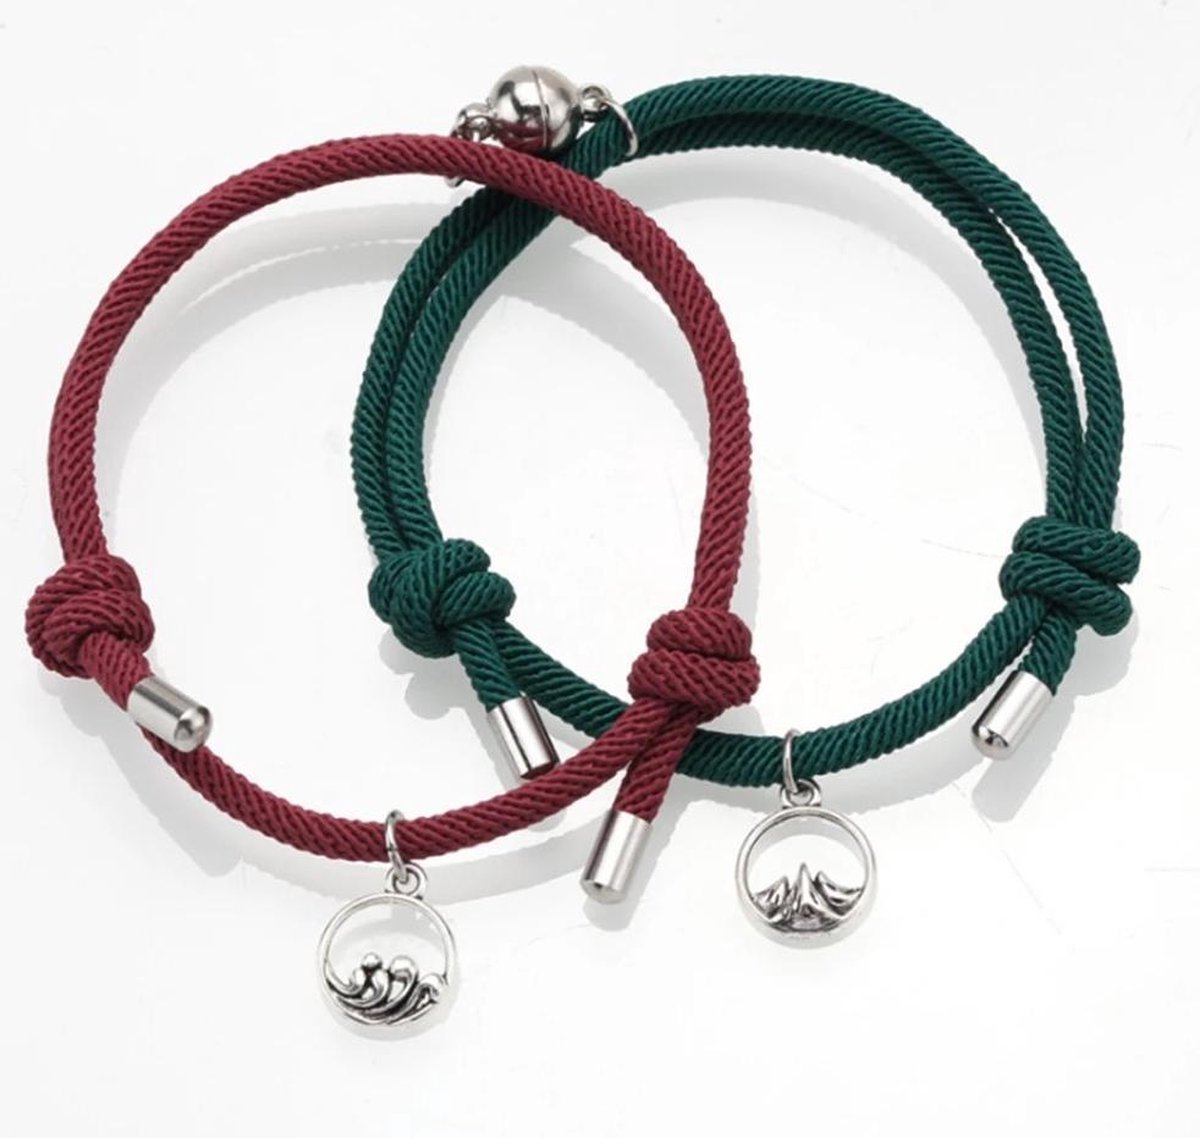 Armband set met magneet - Koppel armband - Wijnrood/Groen - Armband dames - Armband heren - Romantisch cadeau - Vriendschap armband